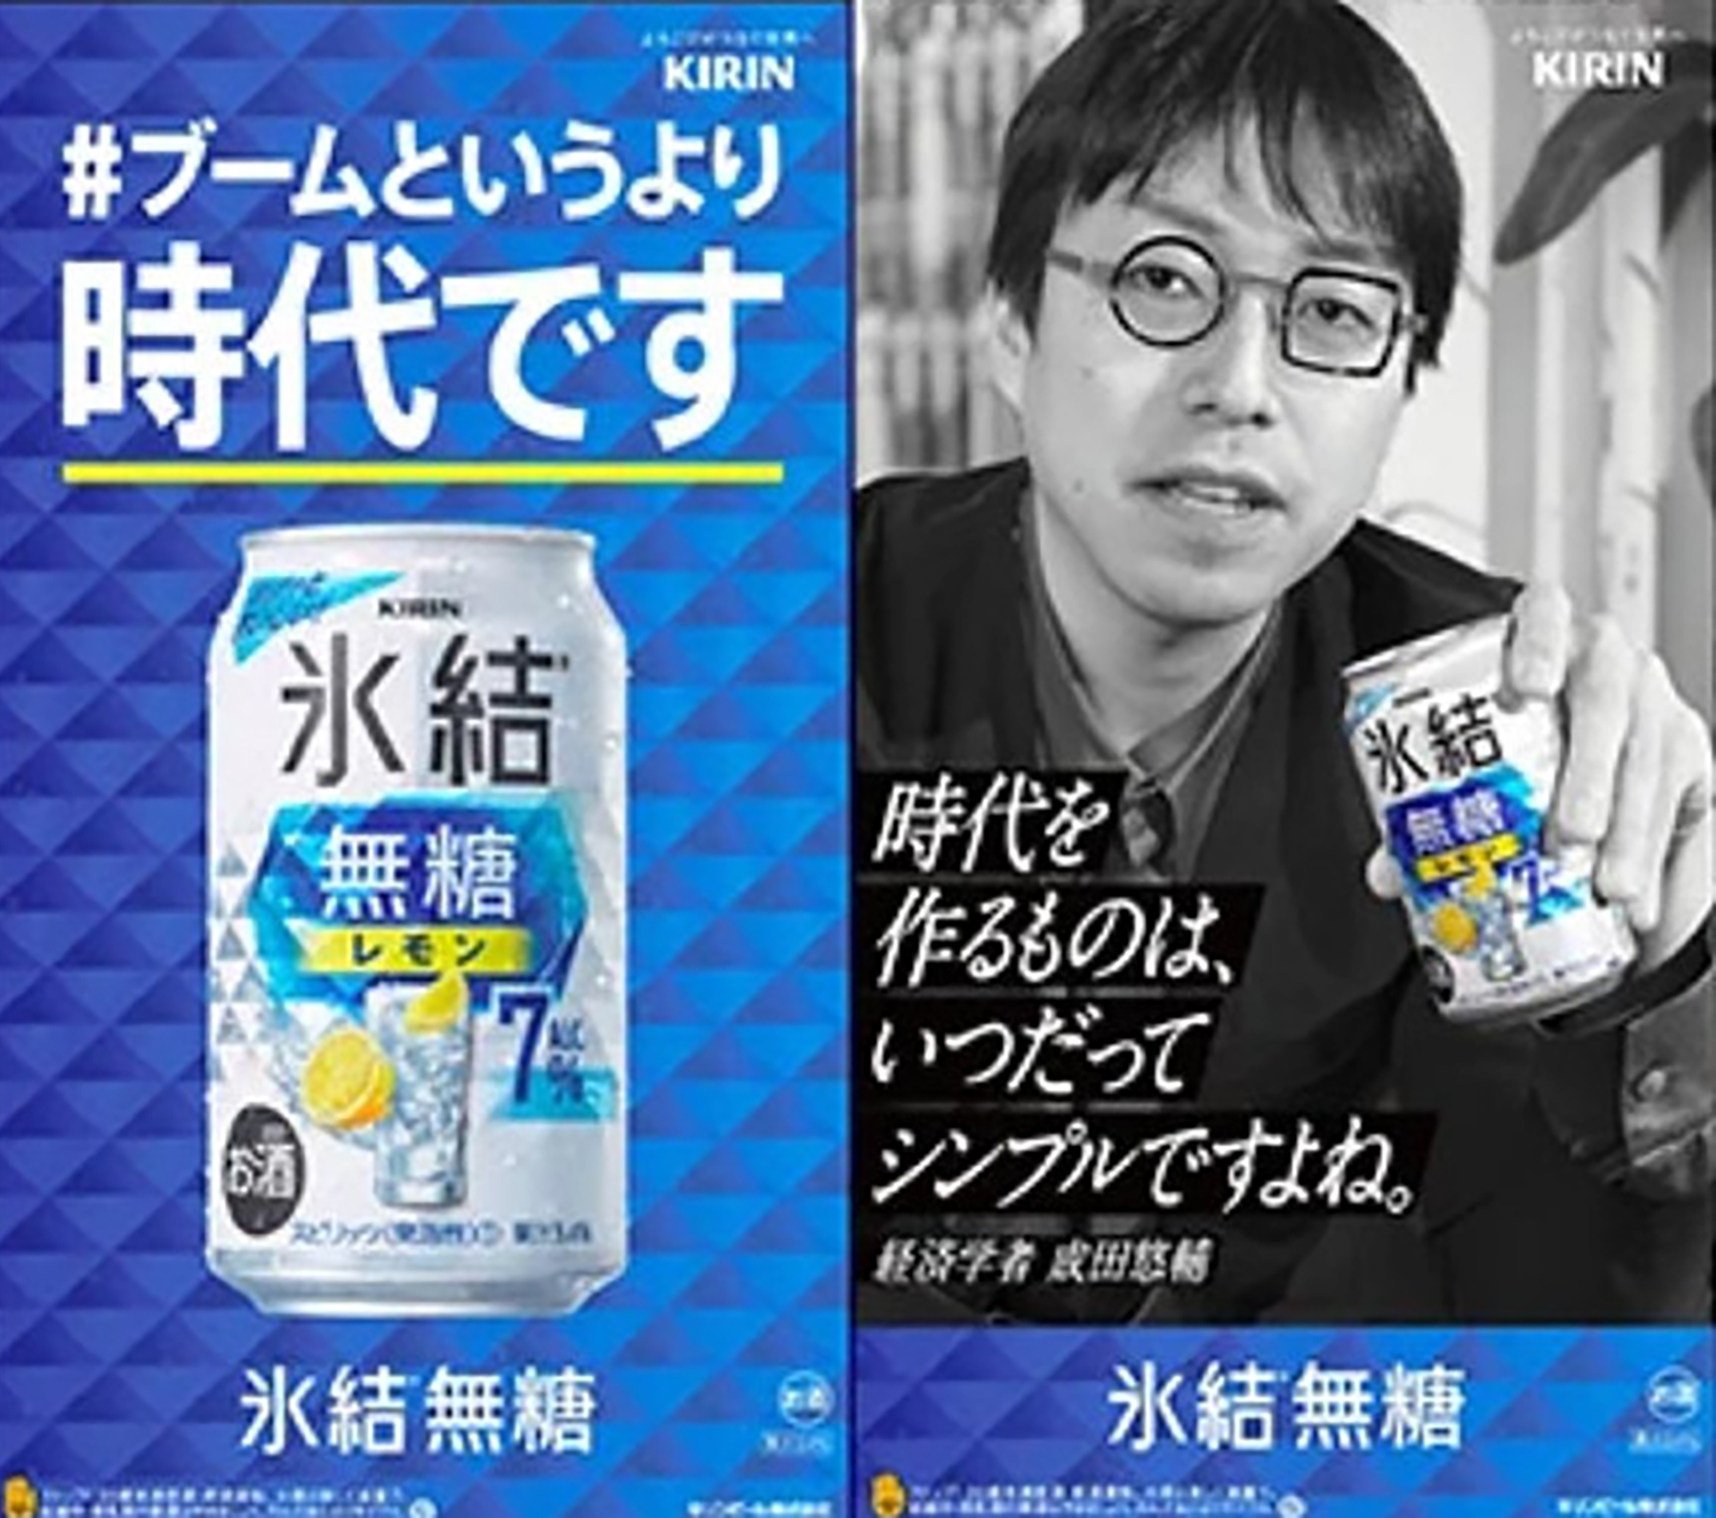 The online ad for Kirin’s alcoholic drink featuring economist Yusuke Narita.  Photo: Handout/Kirin Brewery Co